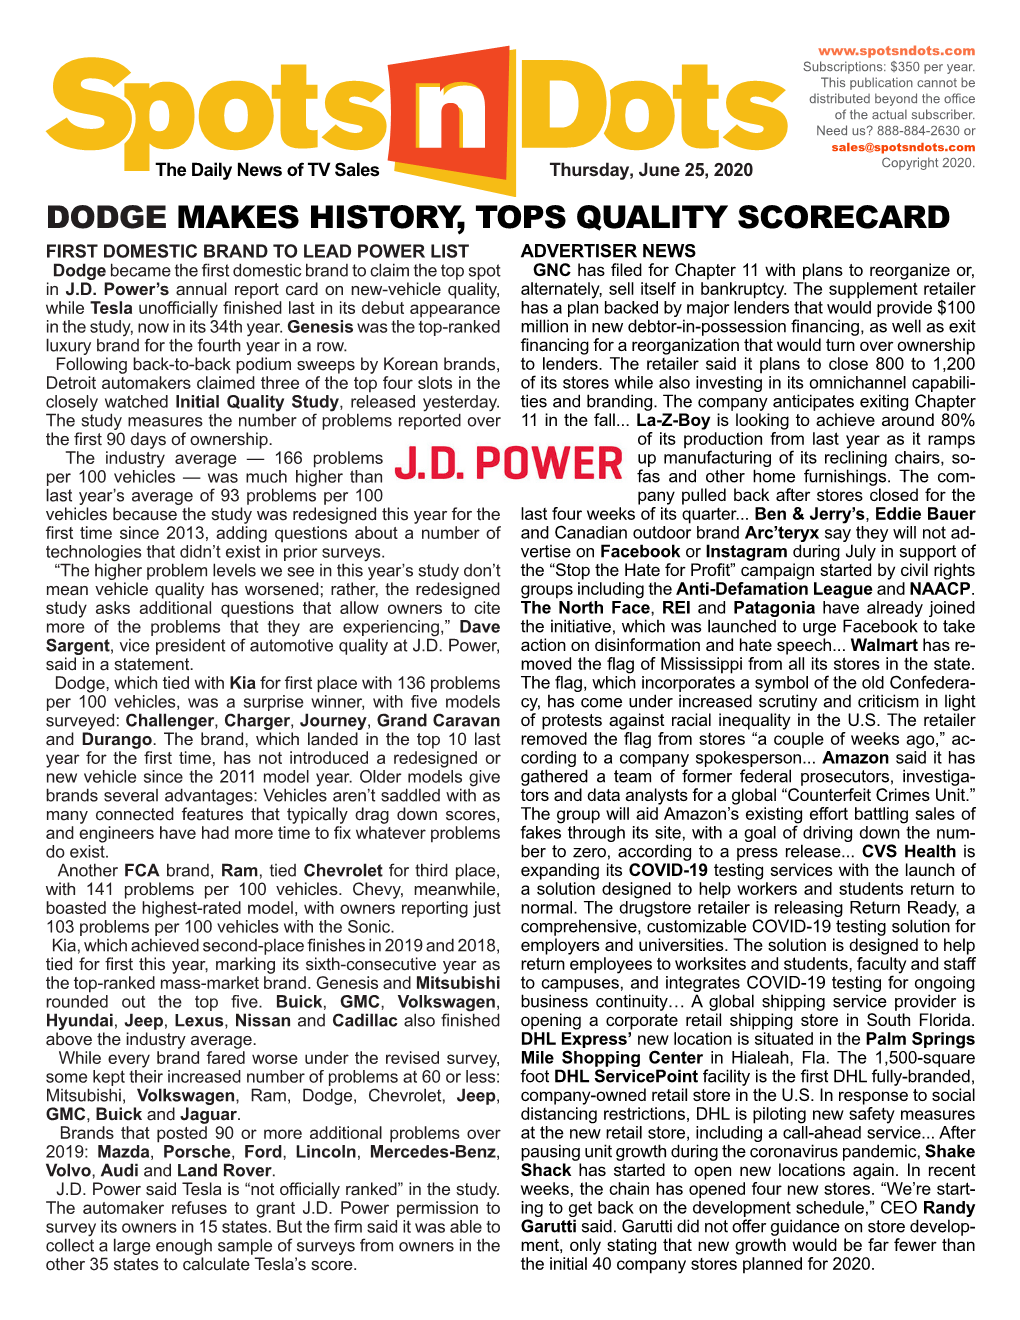 Dodge Makes History, Tops Quality Scorecard